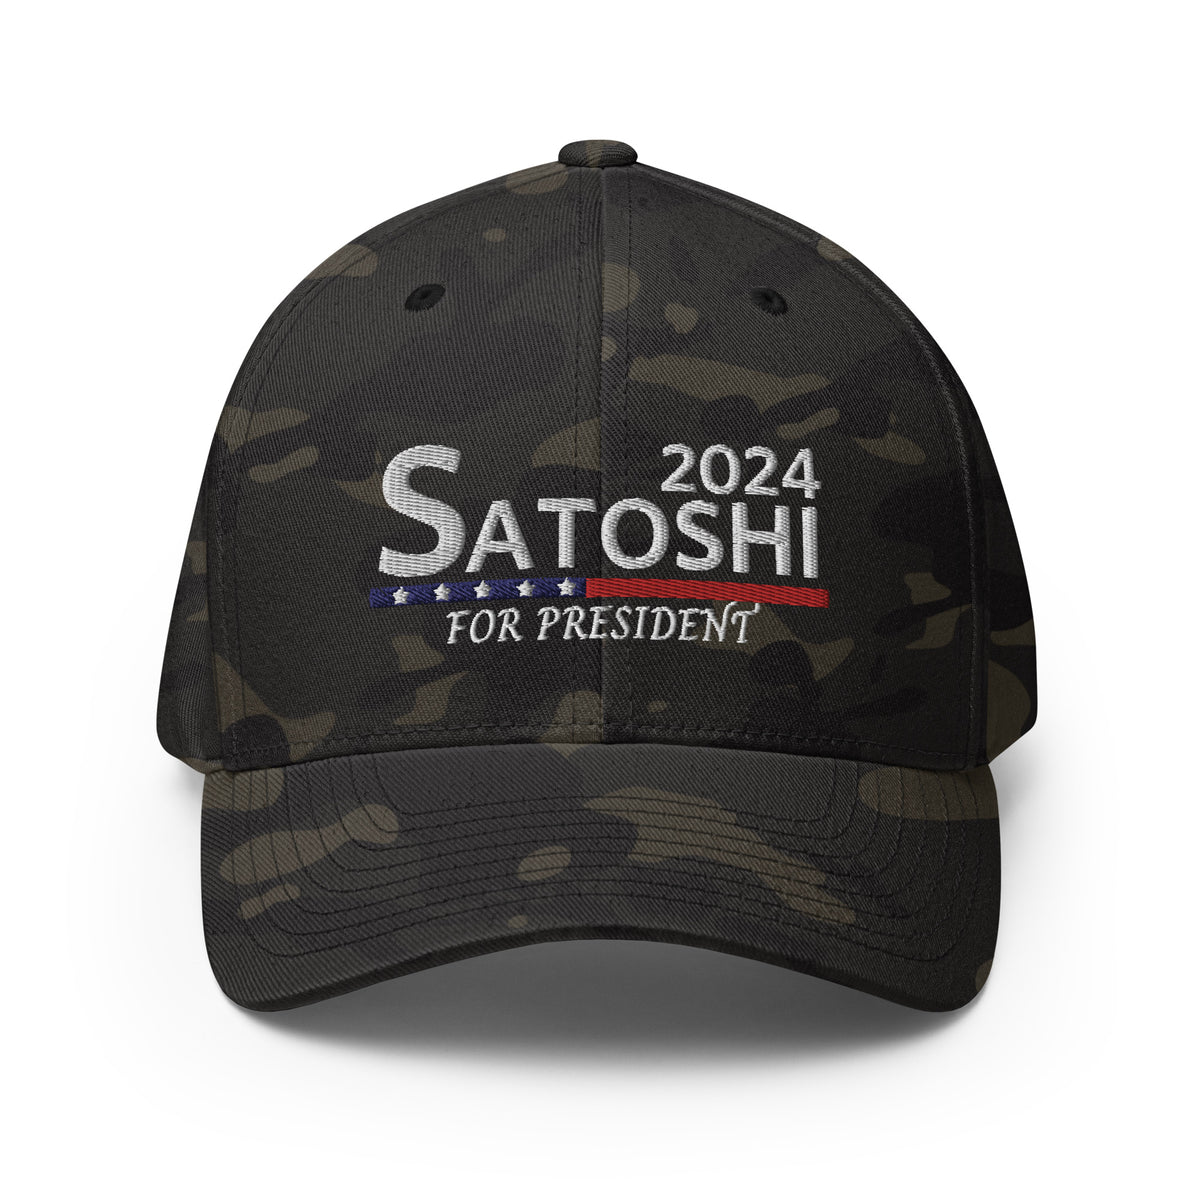 Satoshi For President 2024 Camo Bitcoin Flexfit Hat